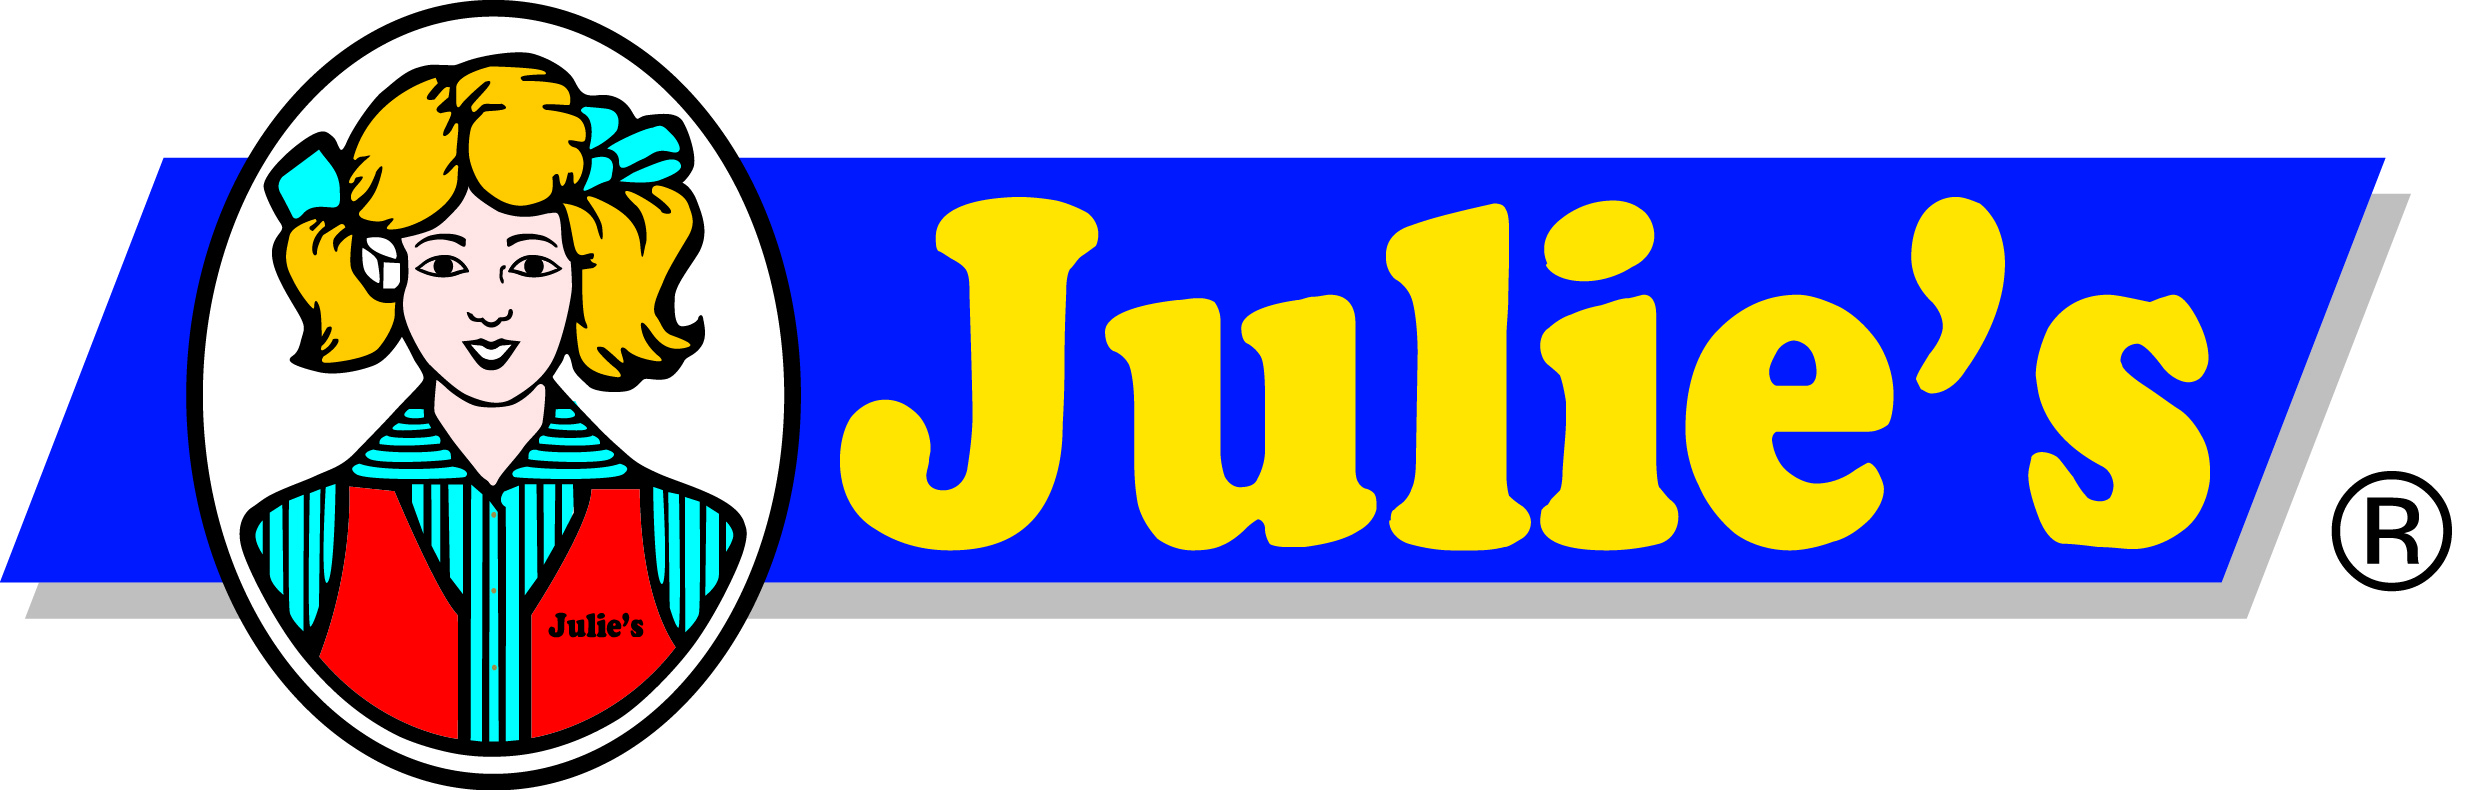 Julie's Logo_High Resolution.jpg